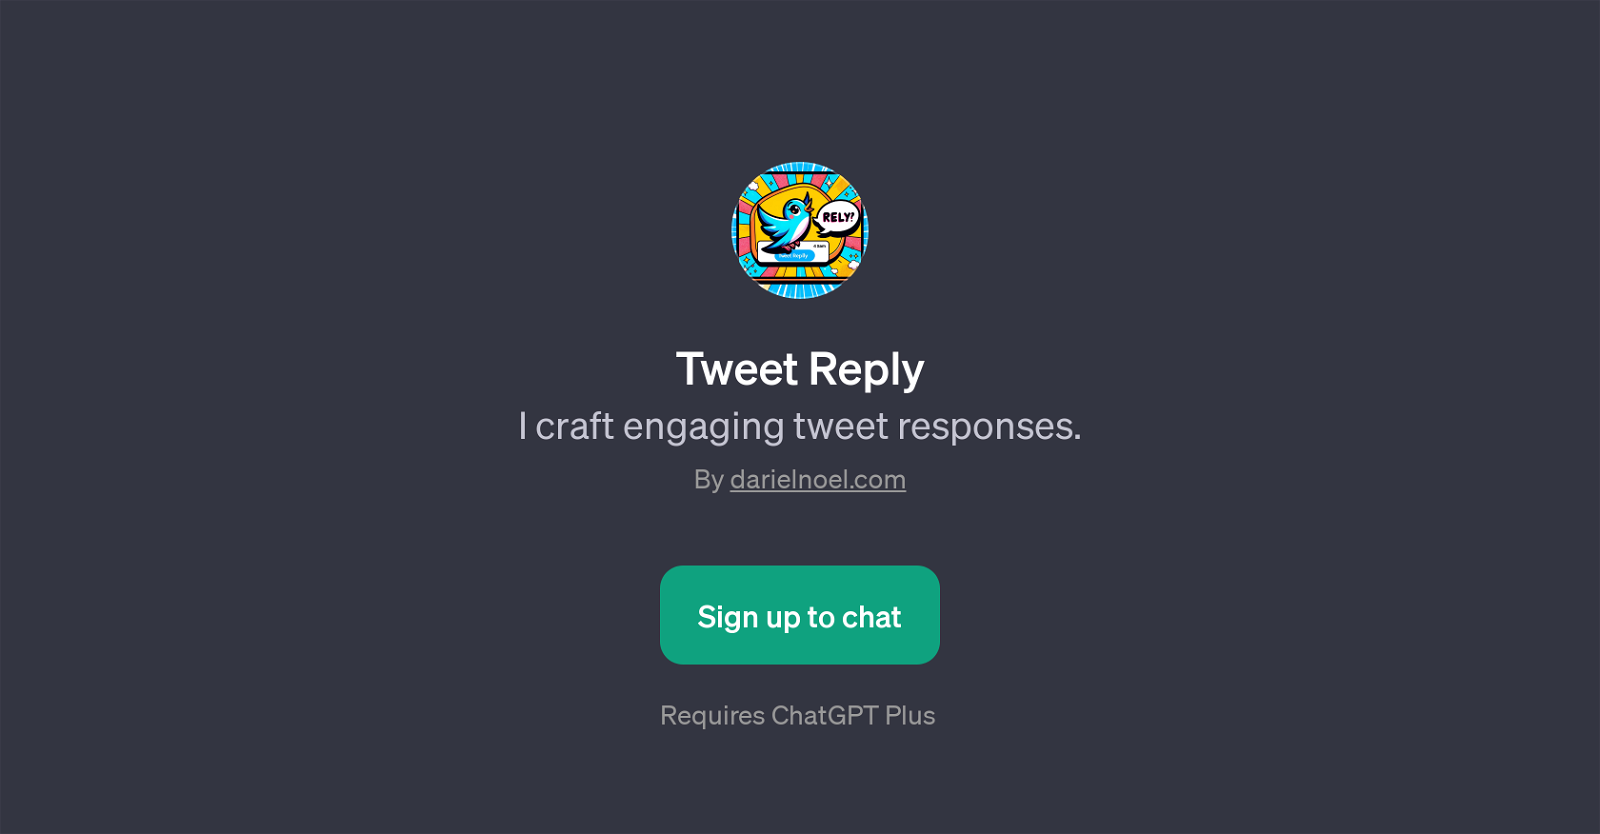 Tweet Reply website